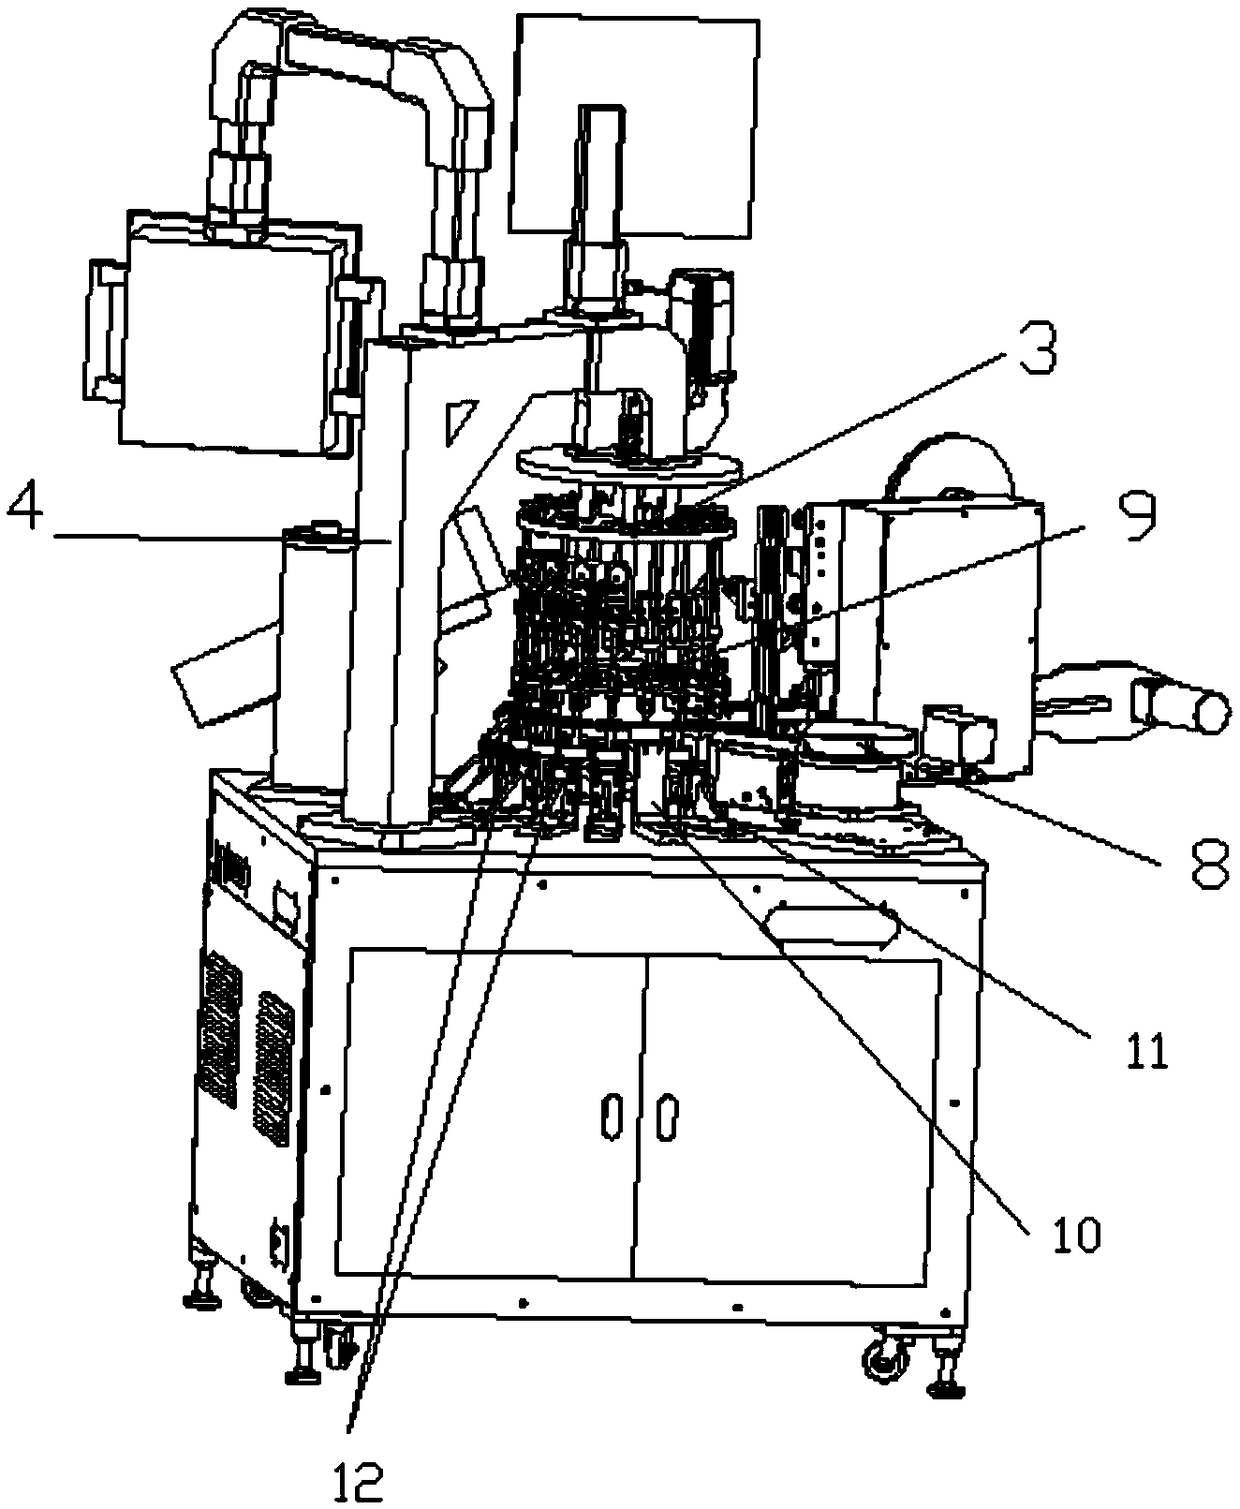 Rotary tower type detecting, marking and braiding integrated machine